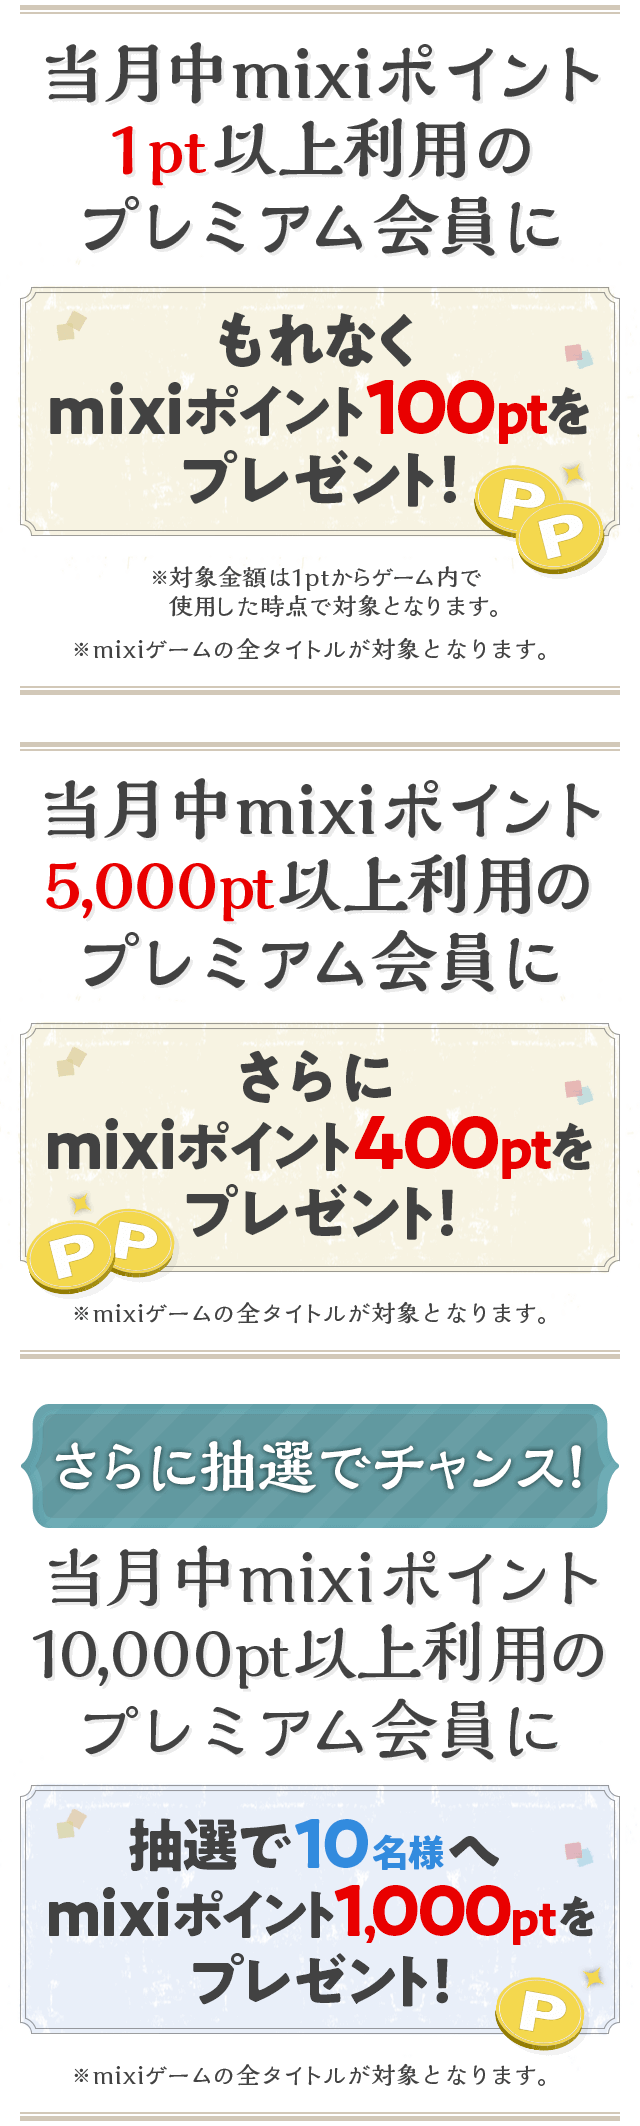 Mixiゲーム プレミアム会員限定 ポイントバックキャンペーン